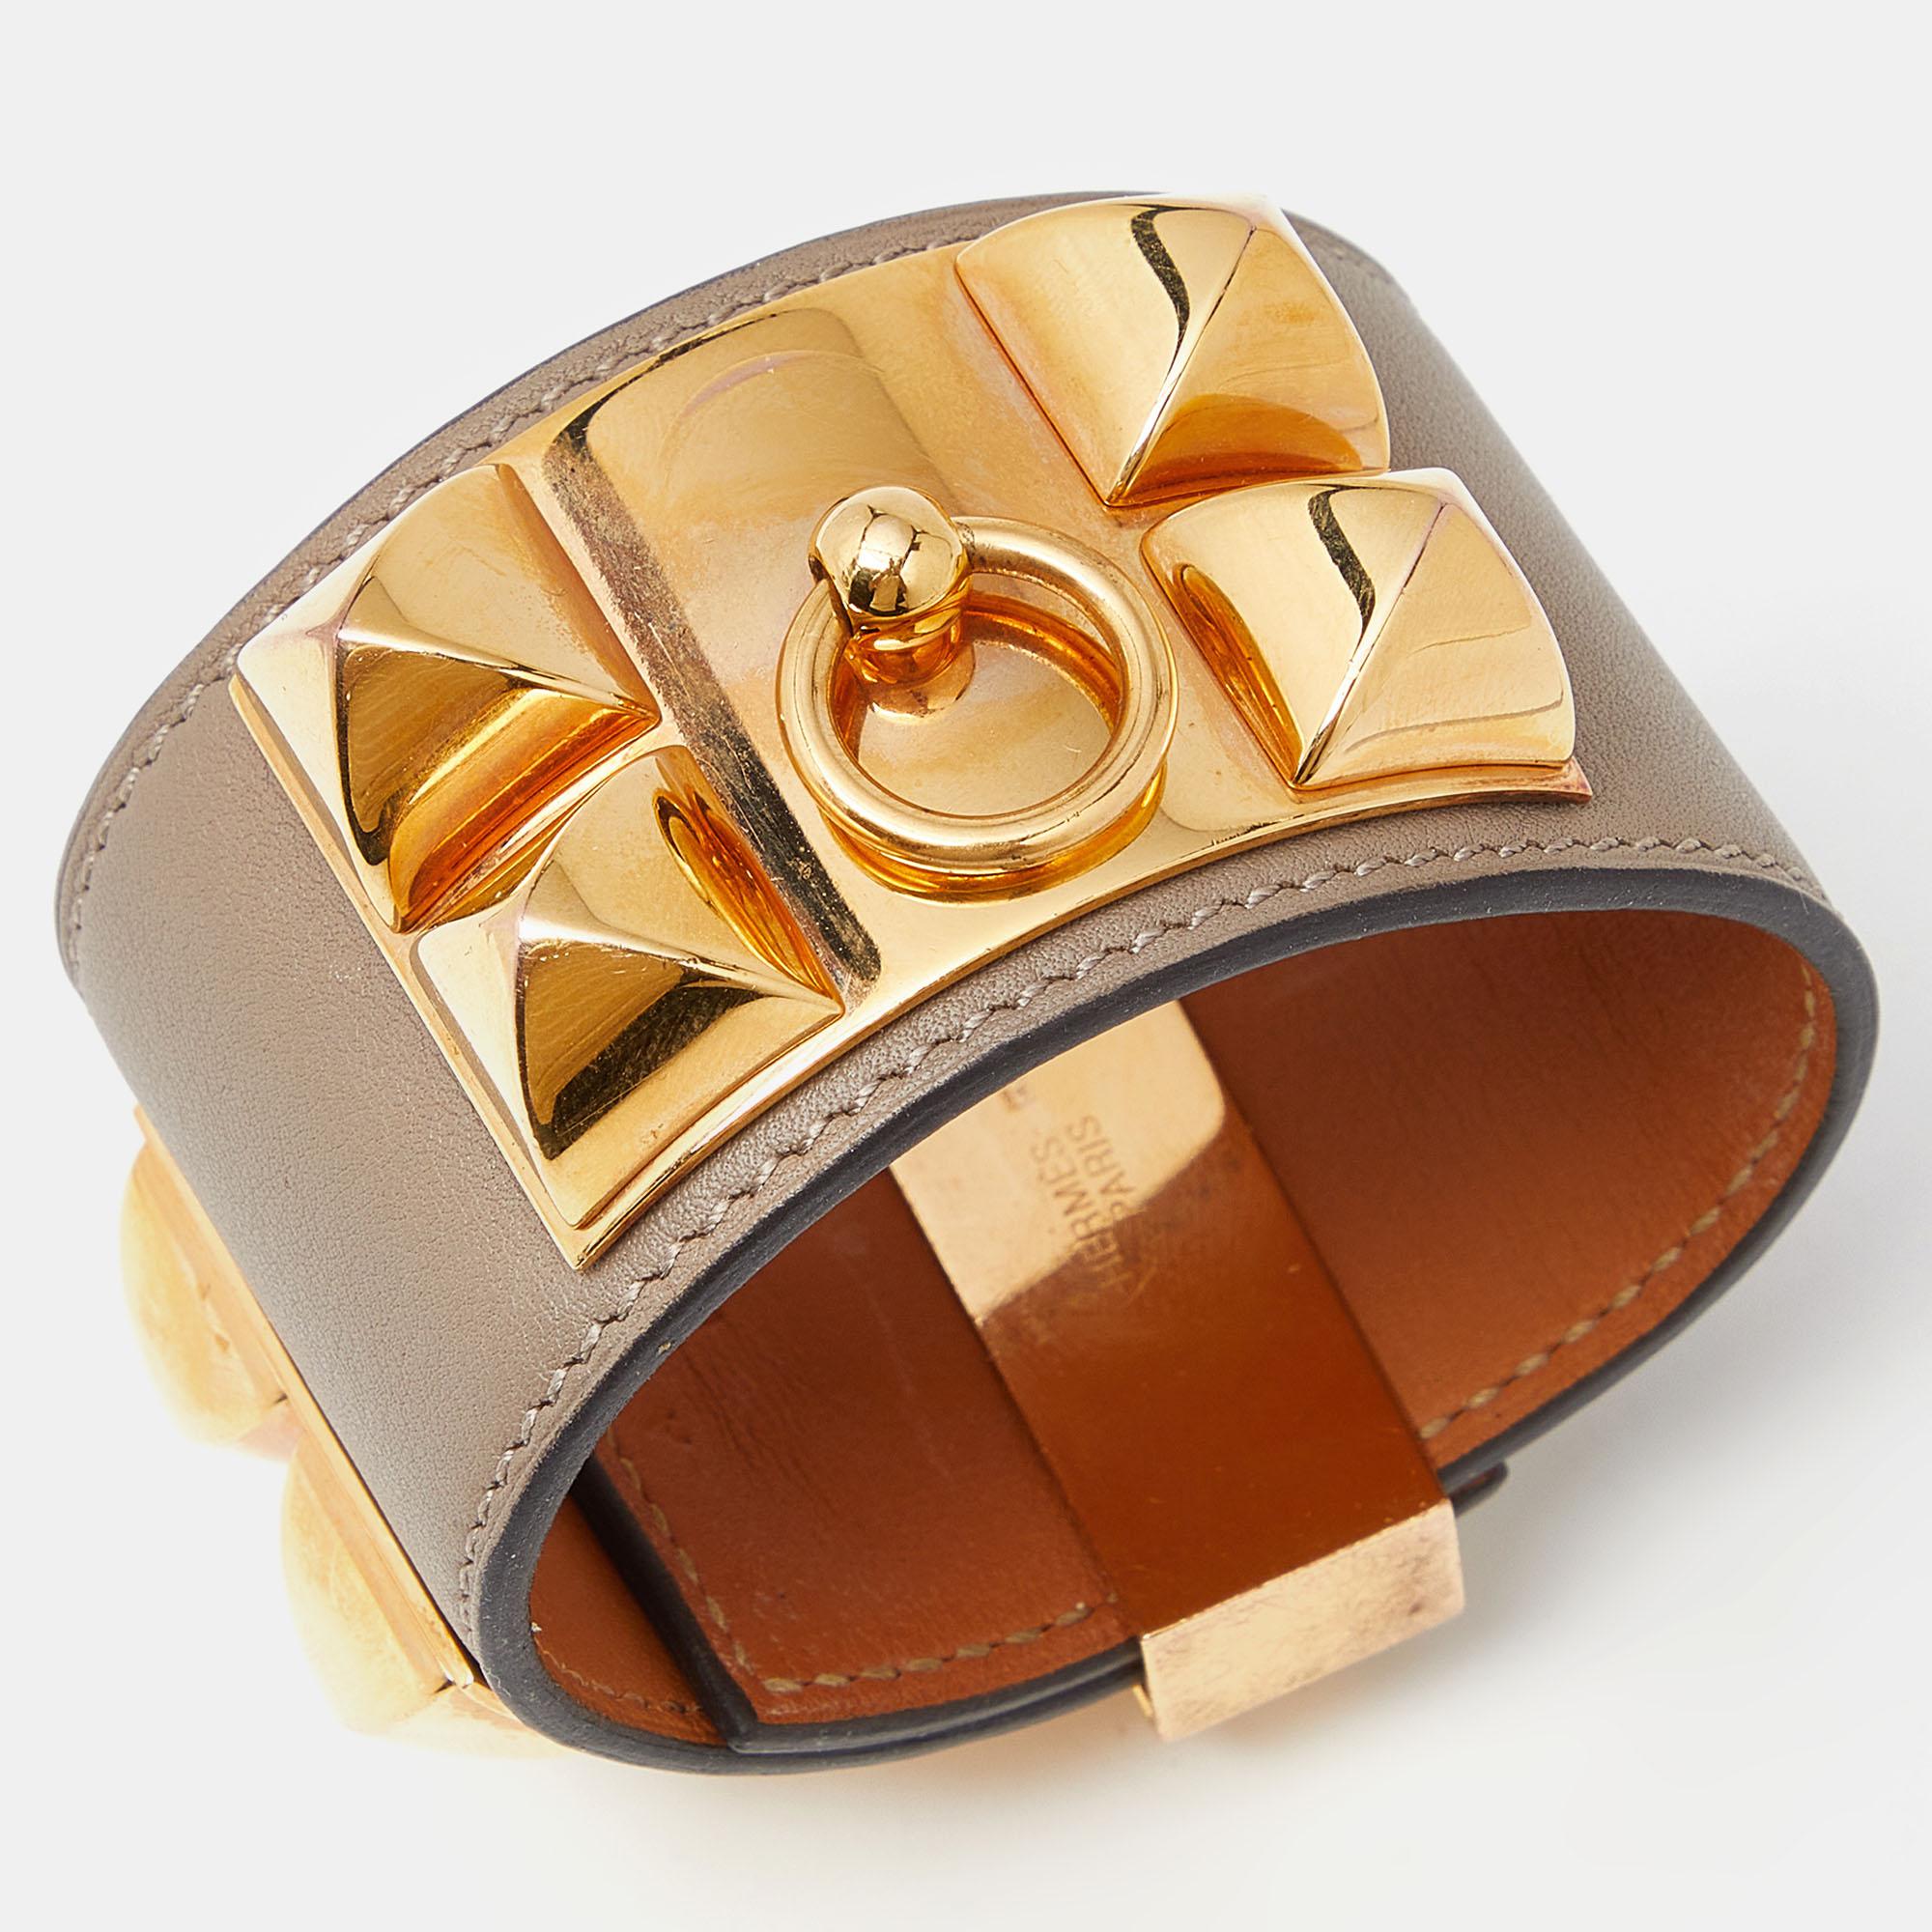 Hermes Collier de Chien Leather Gold Plated Bracelet For Sale 1